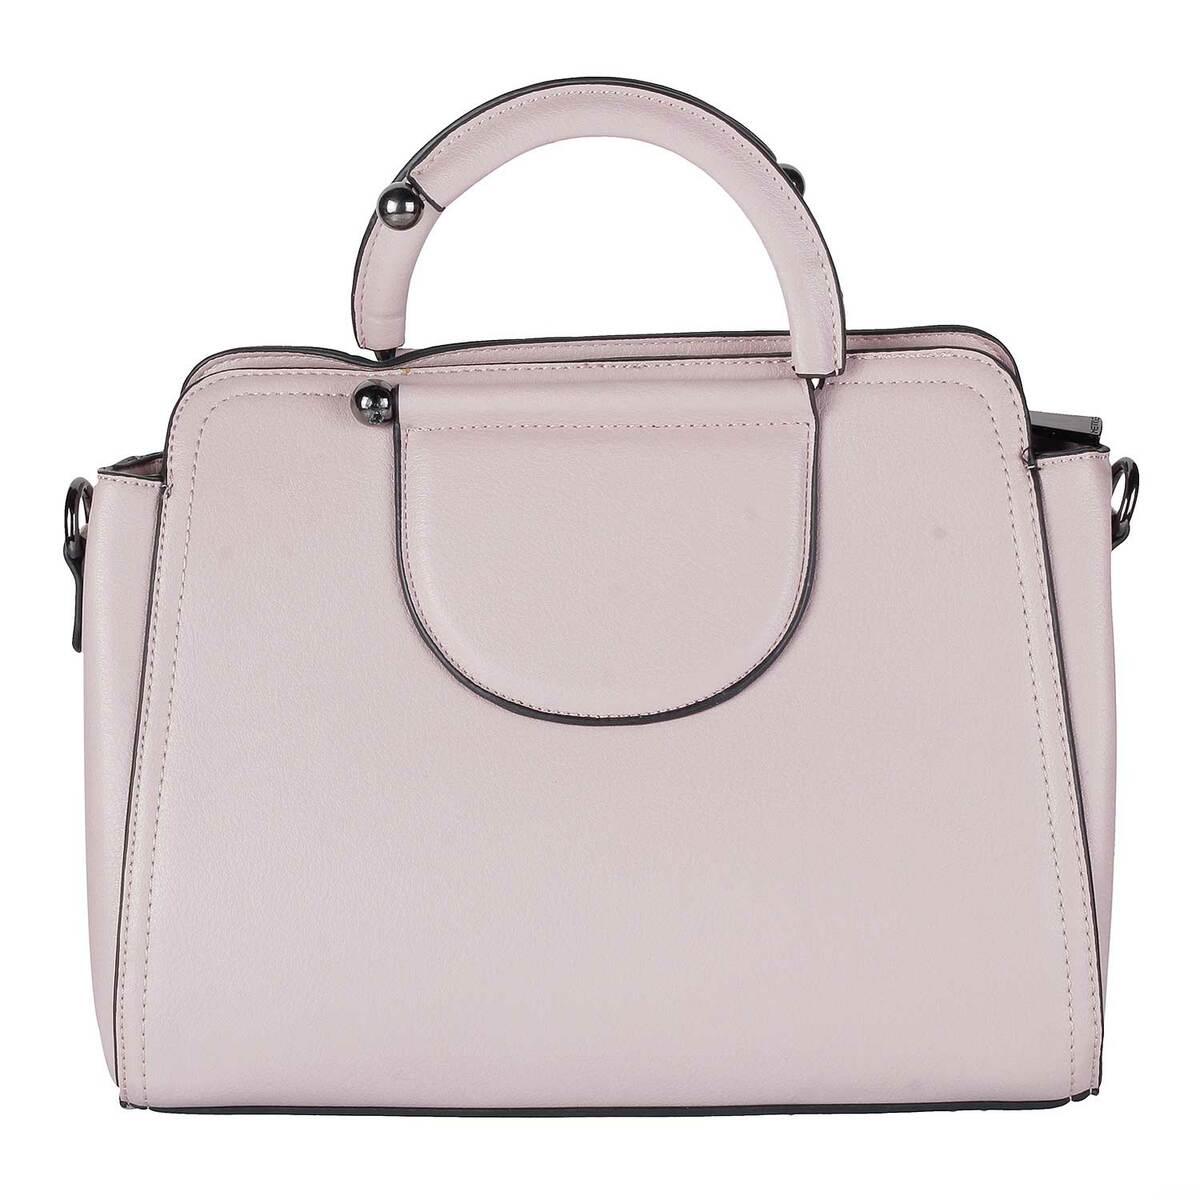 Masikini | Dooney & Bourke Signature Satchel Handbag Purse Light Pink  Leather Trim